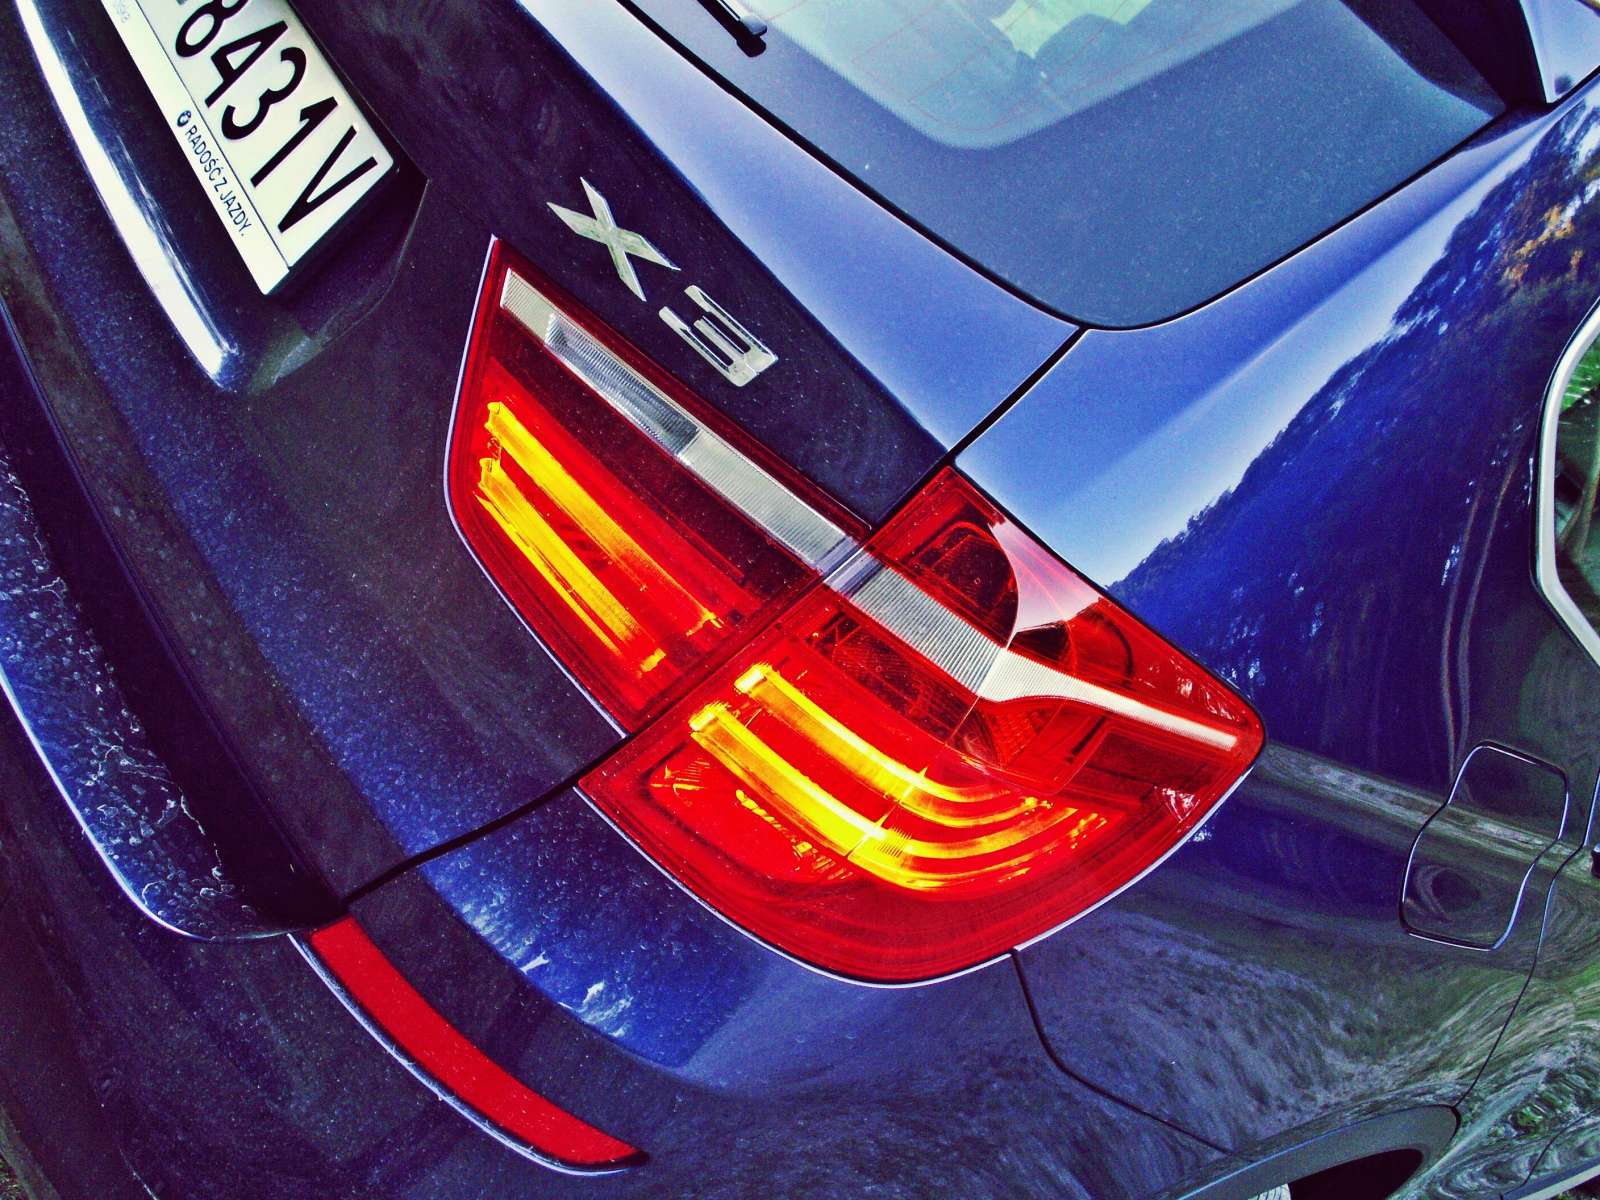 BMW X3 2014 Facelift